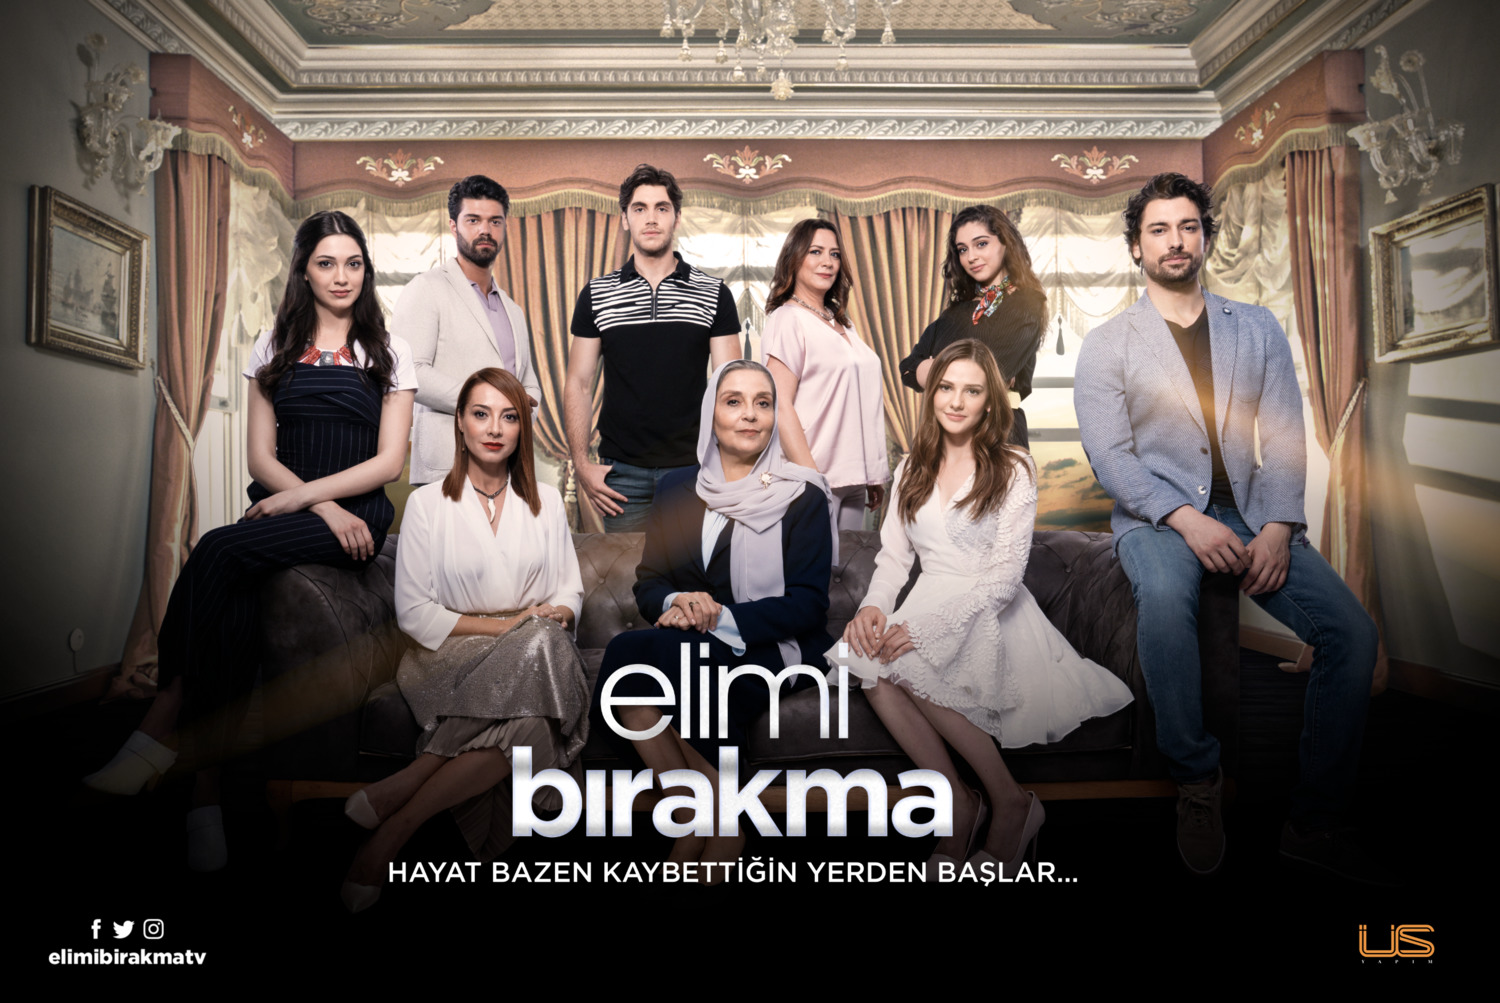 Extra Large TV Poster Image for Elimi birakma (#5 of 20)